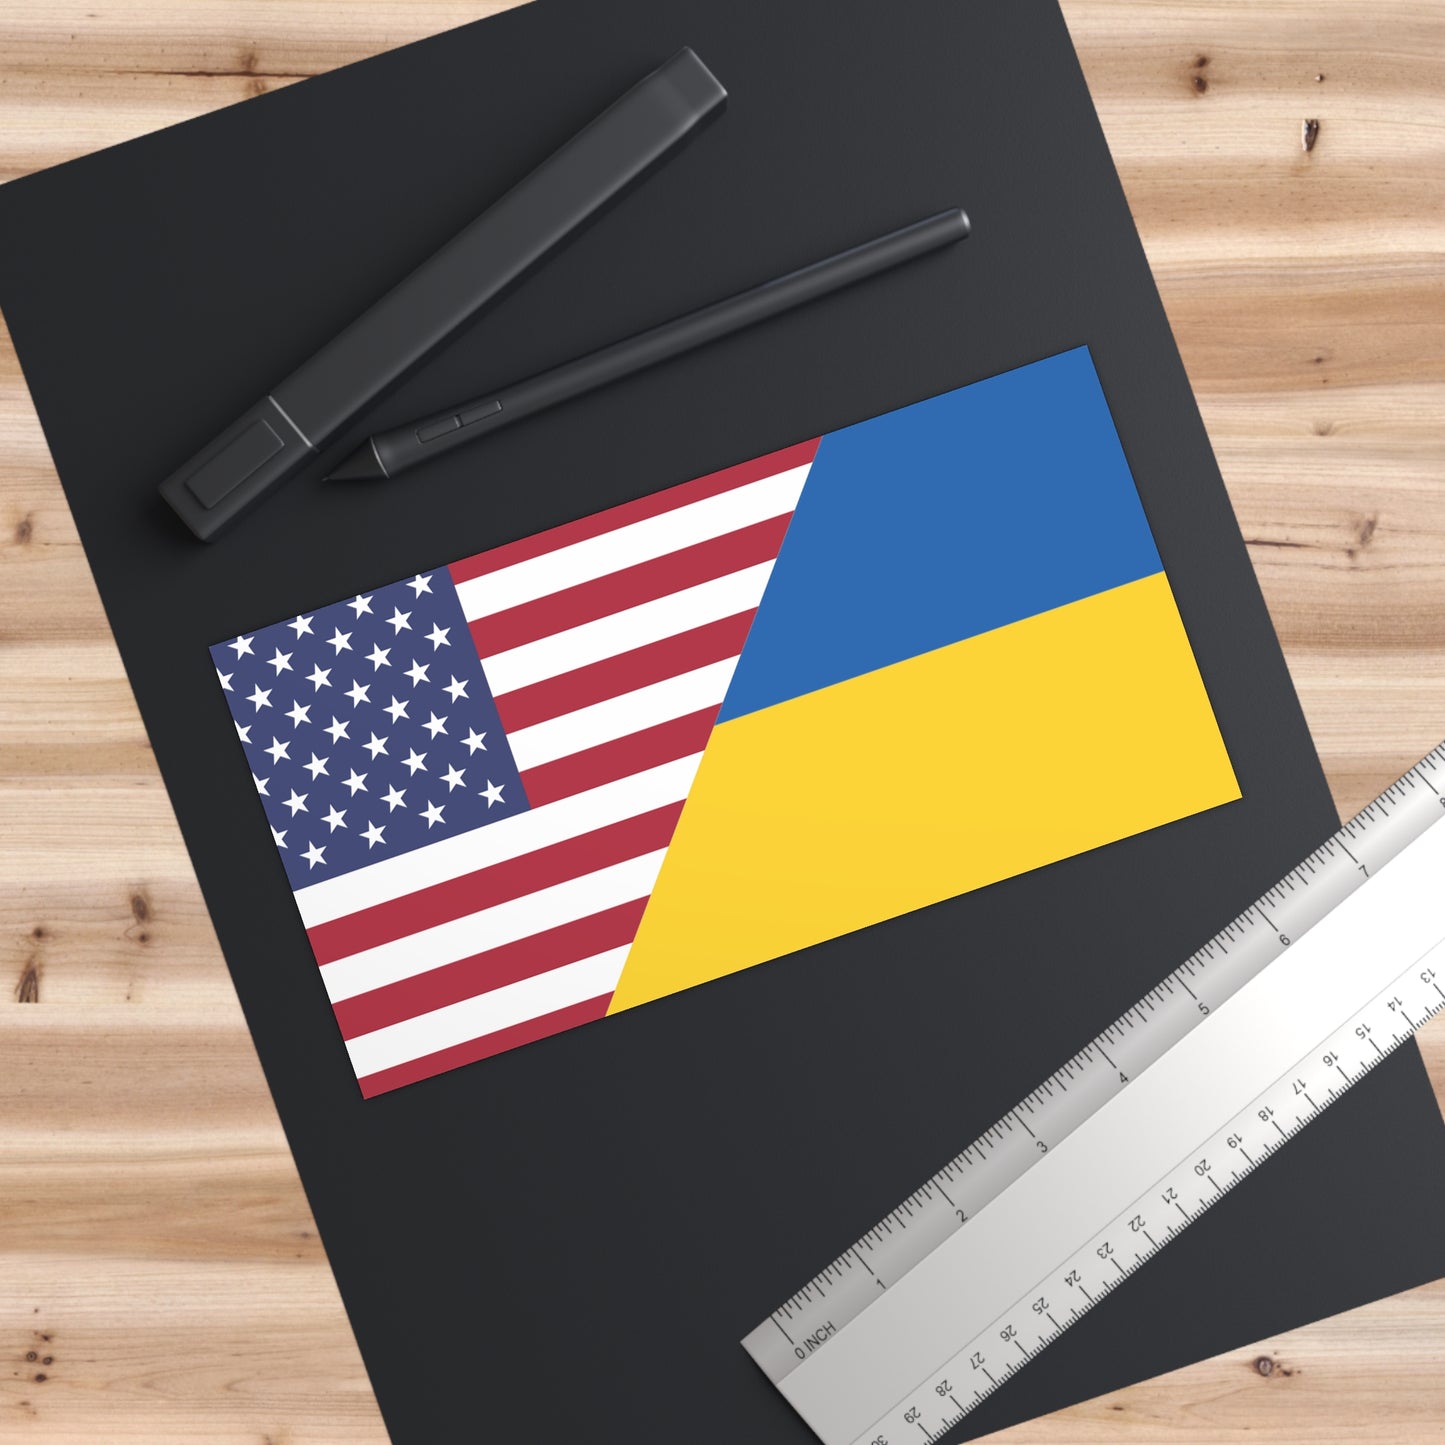 USA supports Ukraine Bumper Stickers